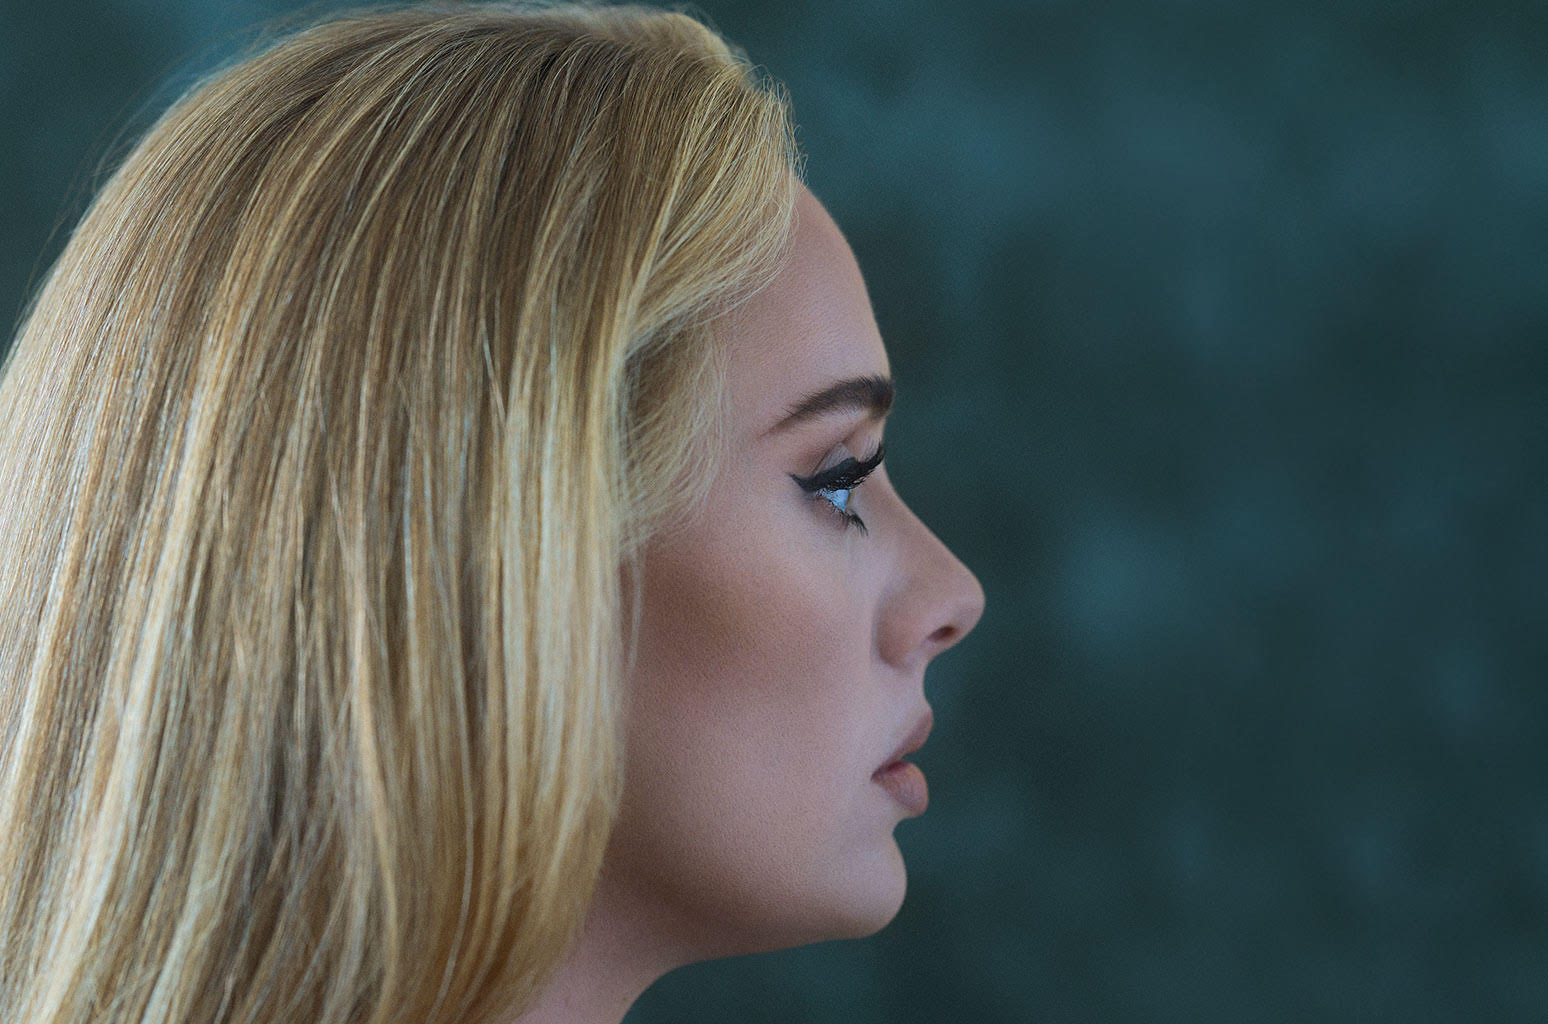 Adele didn't deserve this☹️#adele #angelo #fyp #fypシ #fy #edit